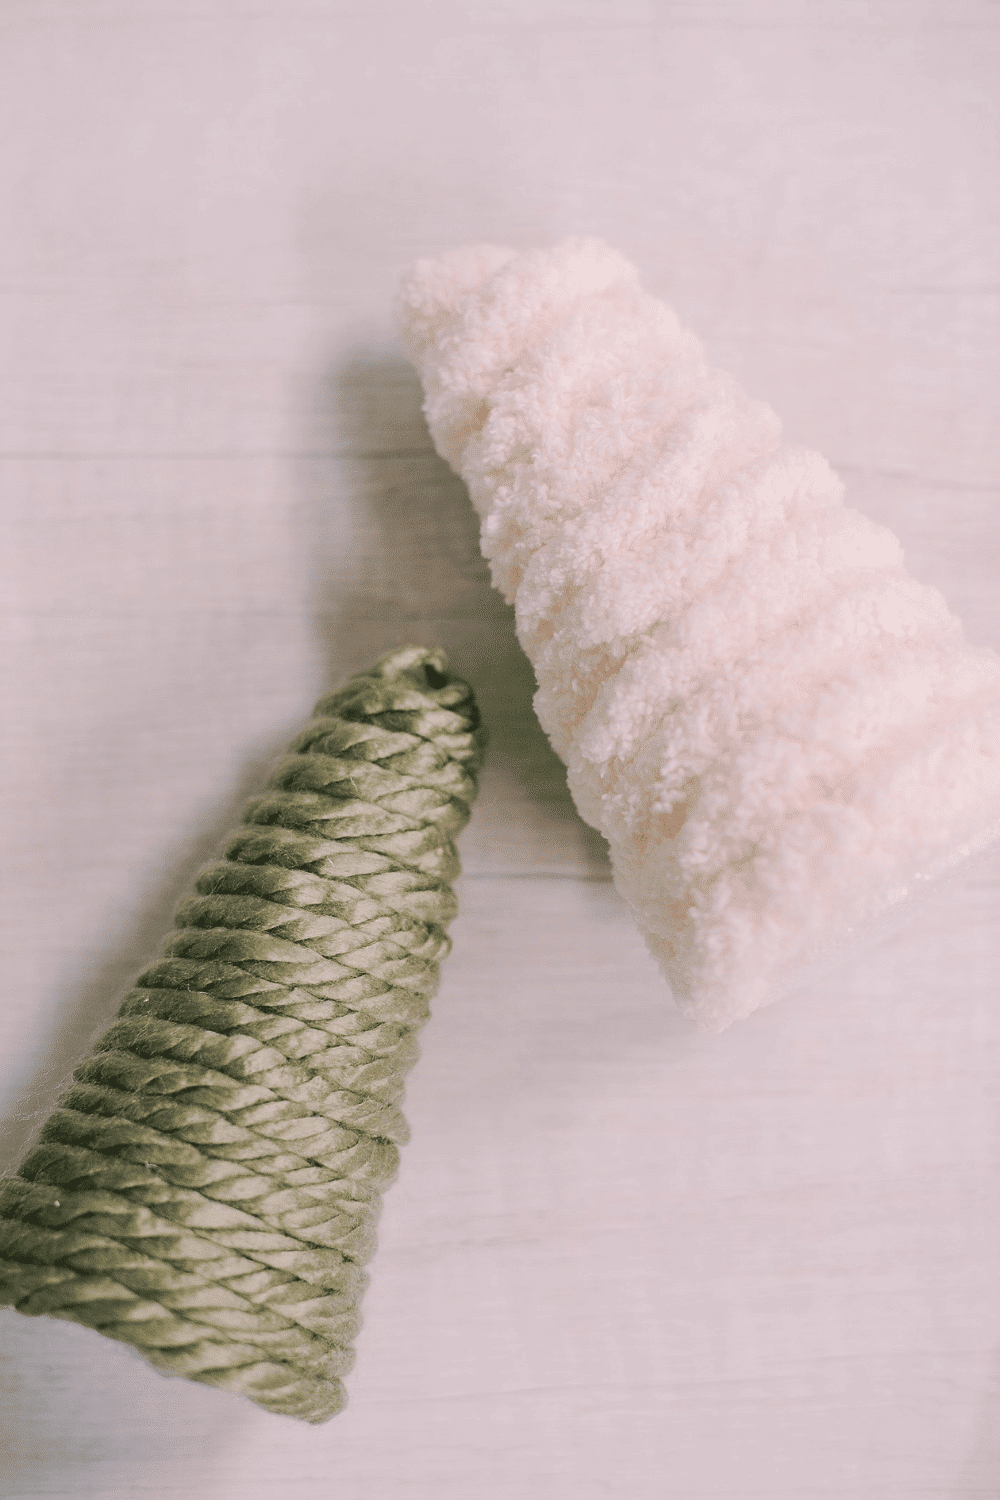 How to Make DIY Chunky Yarn-Wrapped Styrofoam Trees